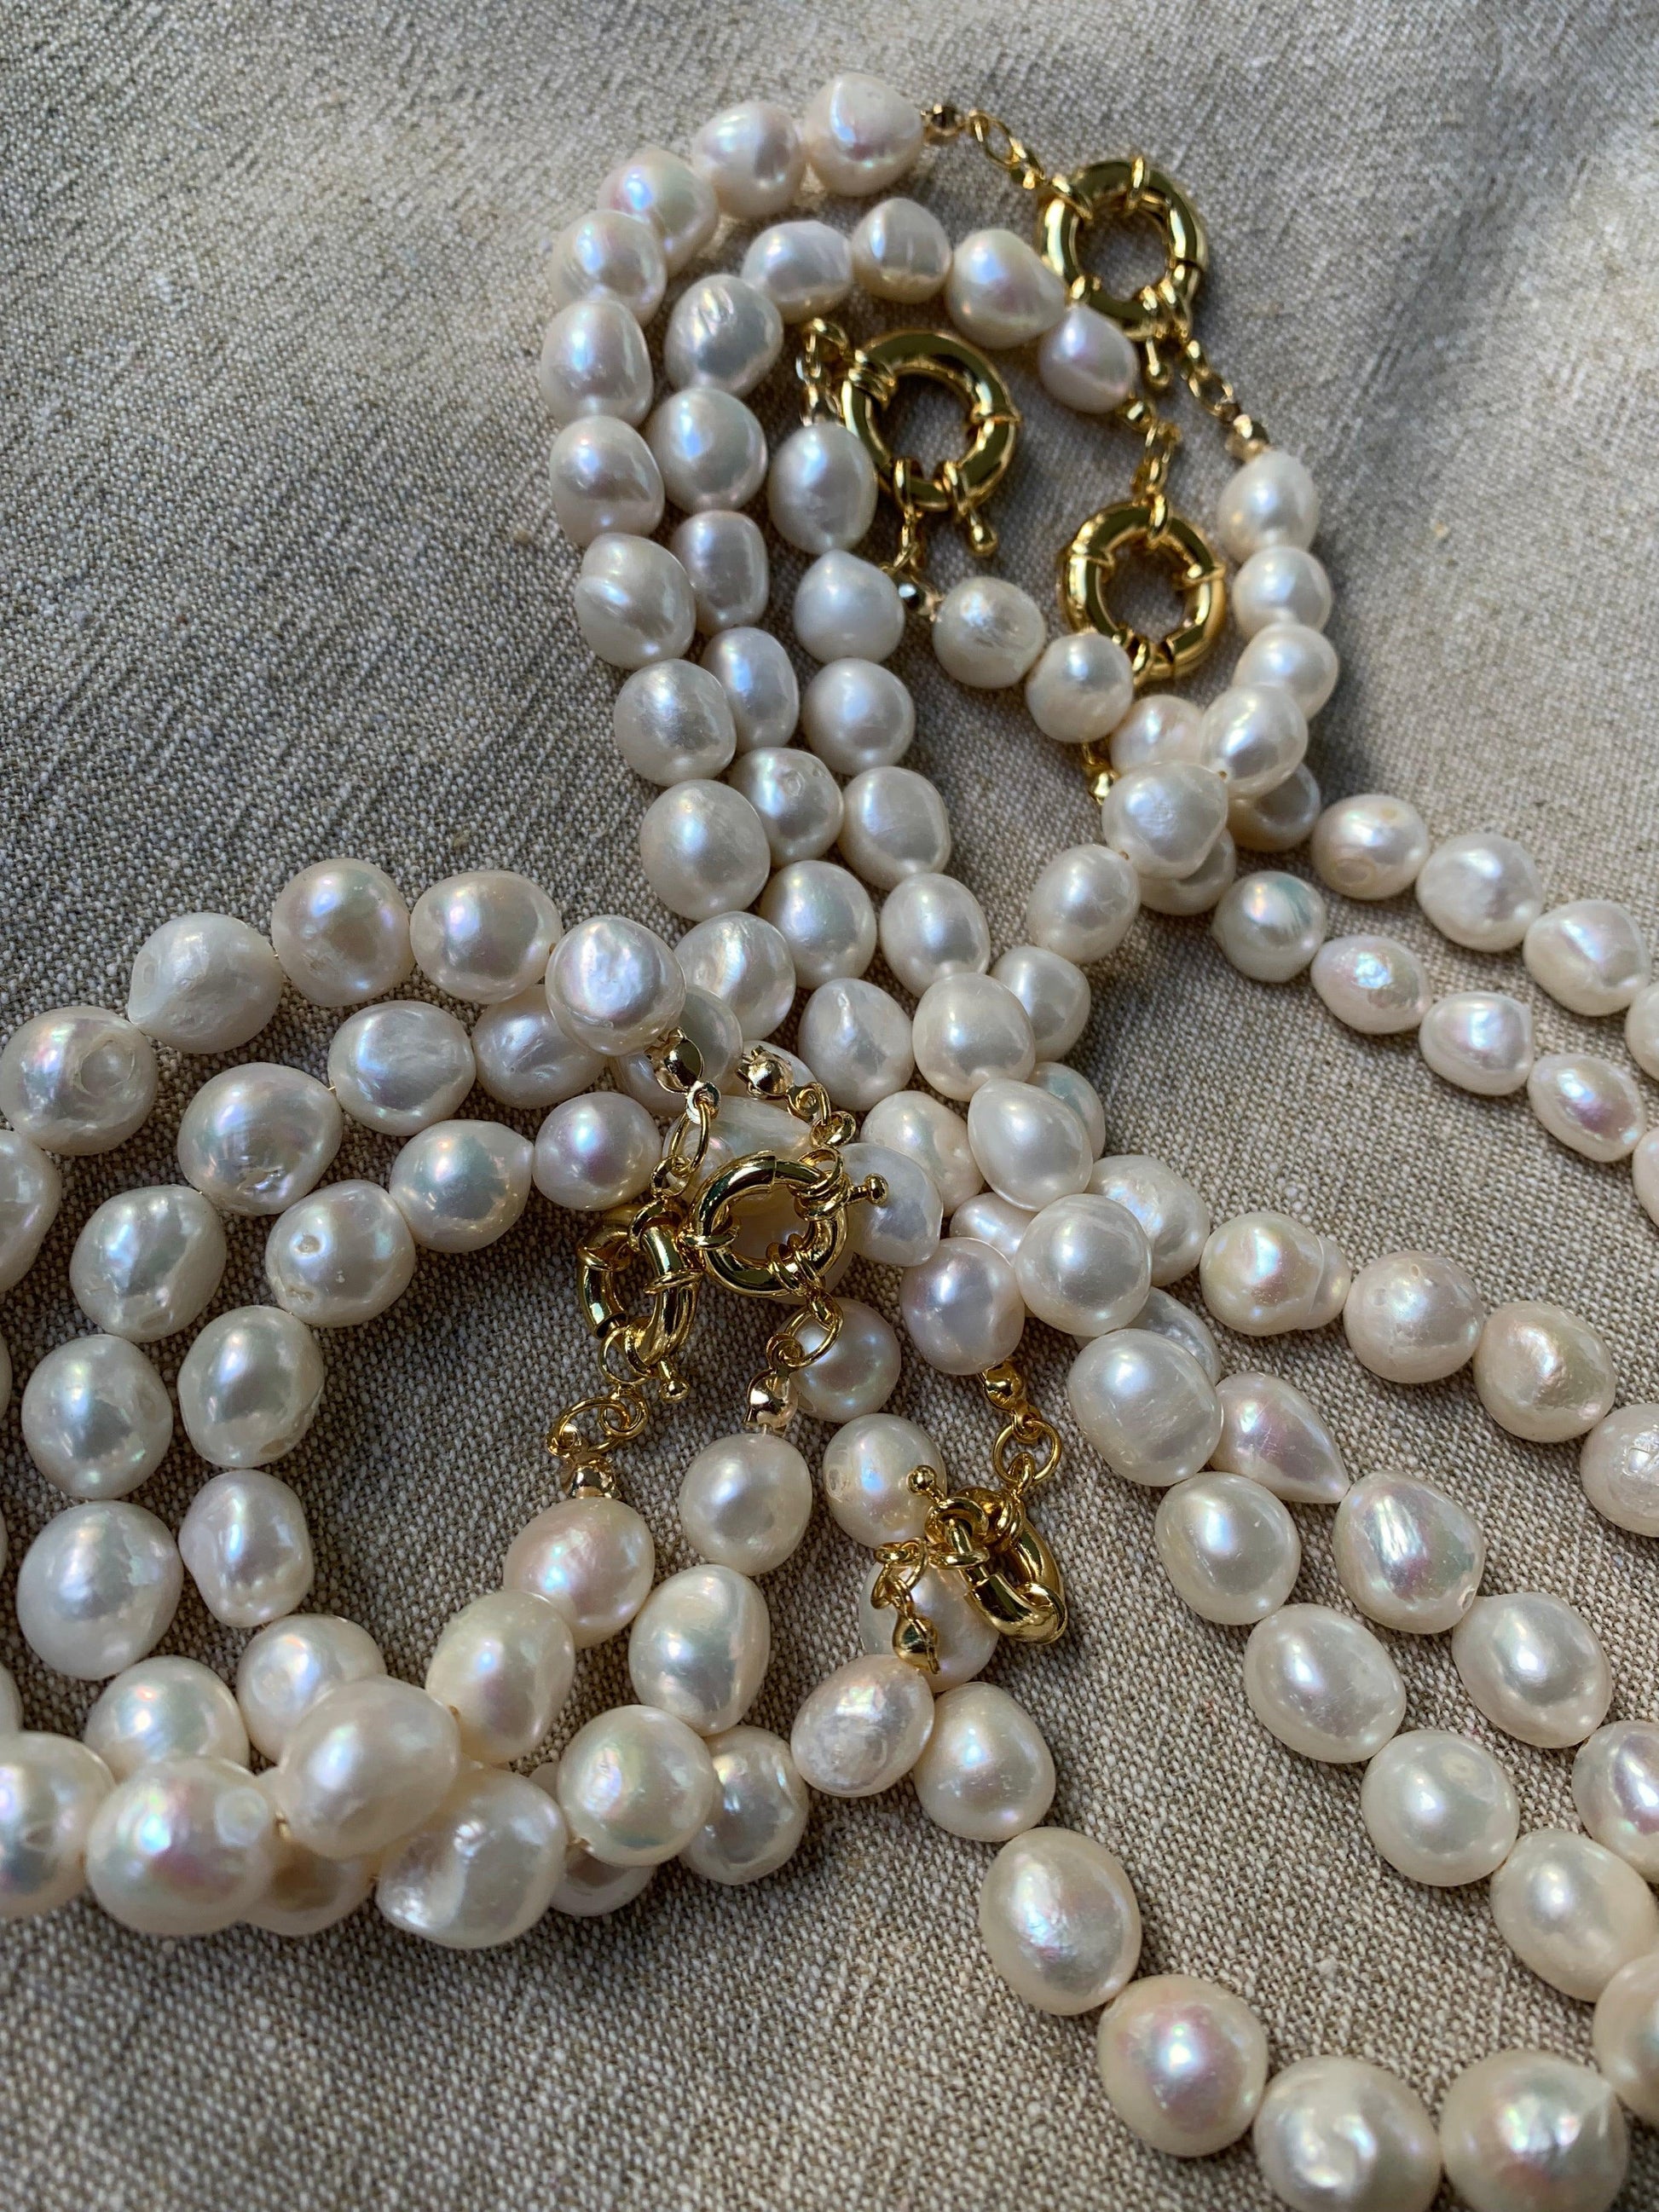 Pearl necklace made of authentic genuine pearls - littlehavanaarttowear